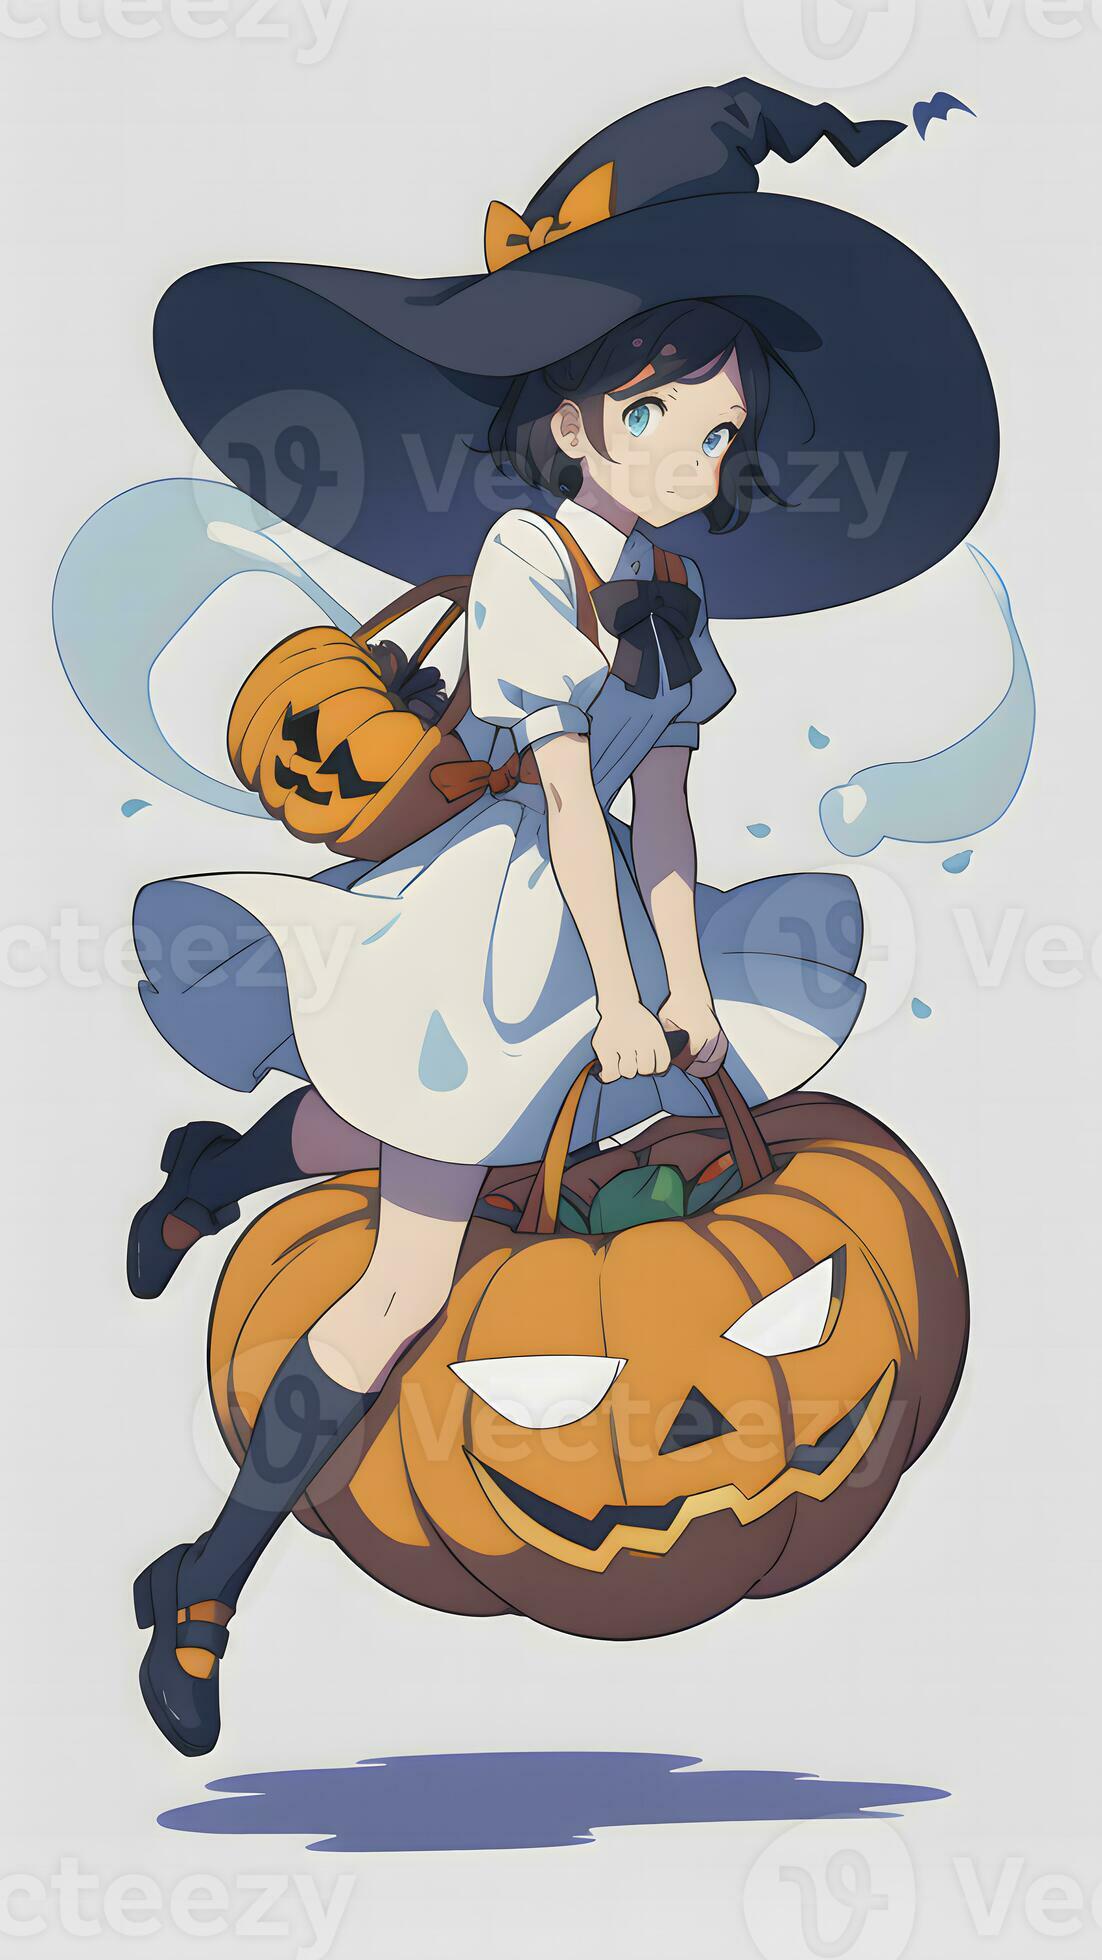 Kawaii Anime Girl in a Halloween Pumpkin - Anime Halloween